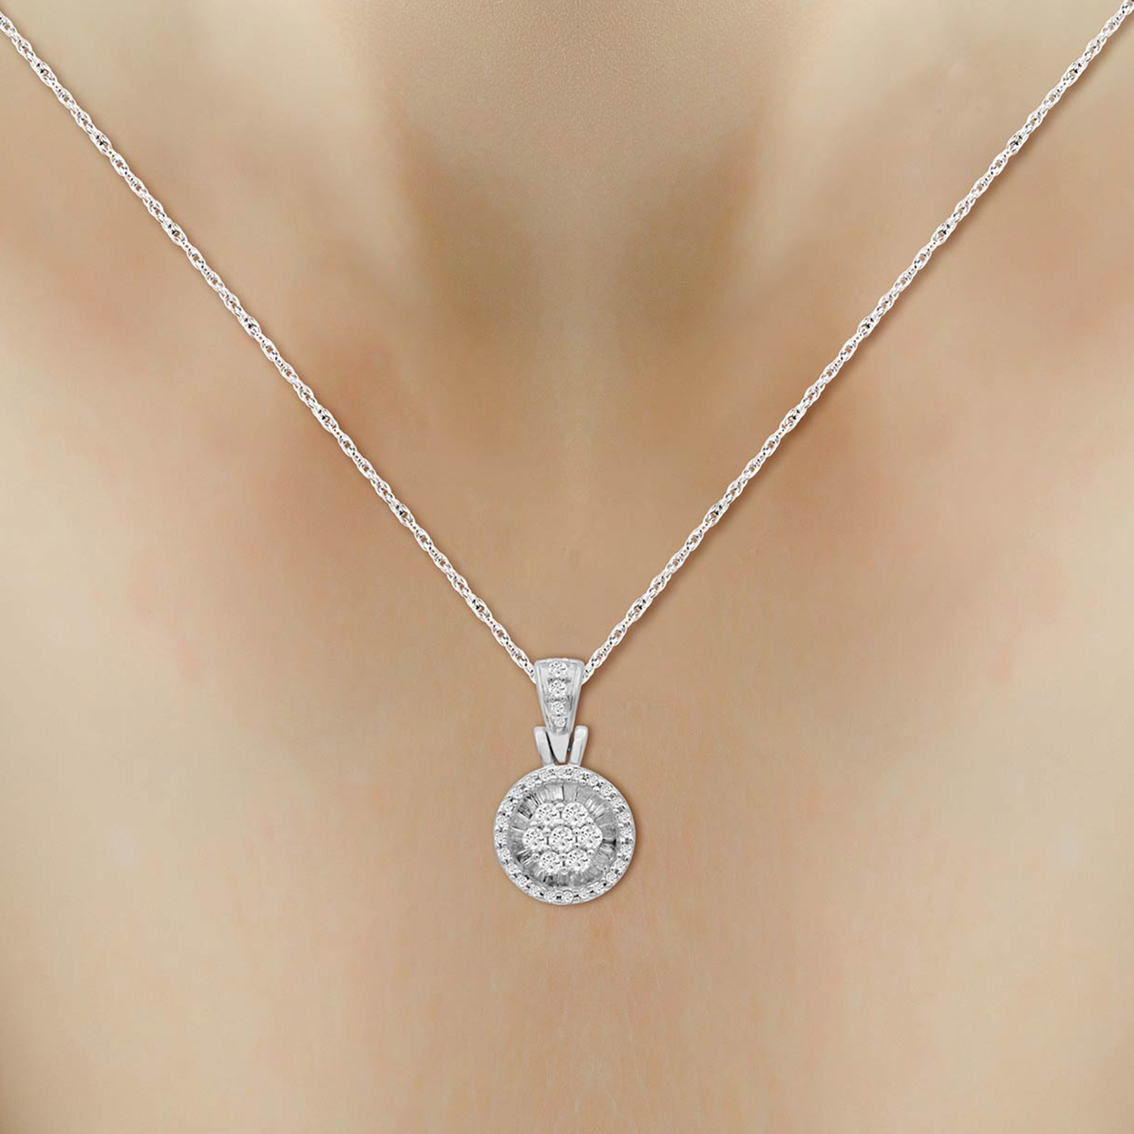 She Shines 10K White Gold 1 CTW Diamond Round Pendant and Earring Set - Image 5 of 6